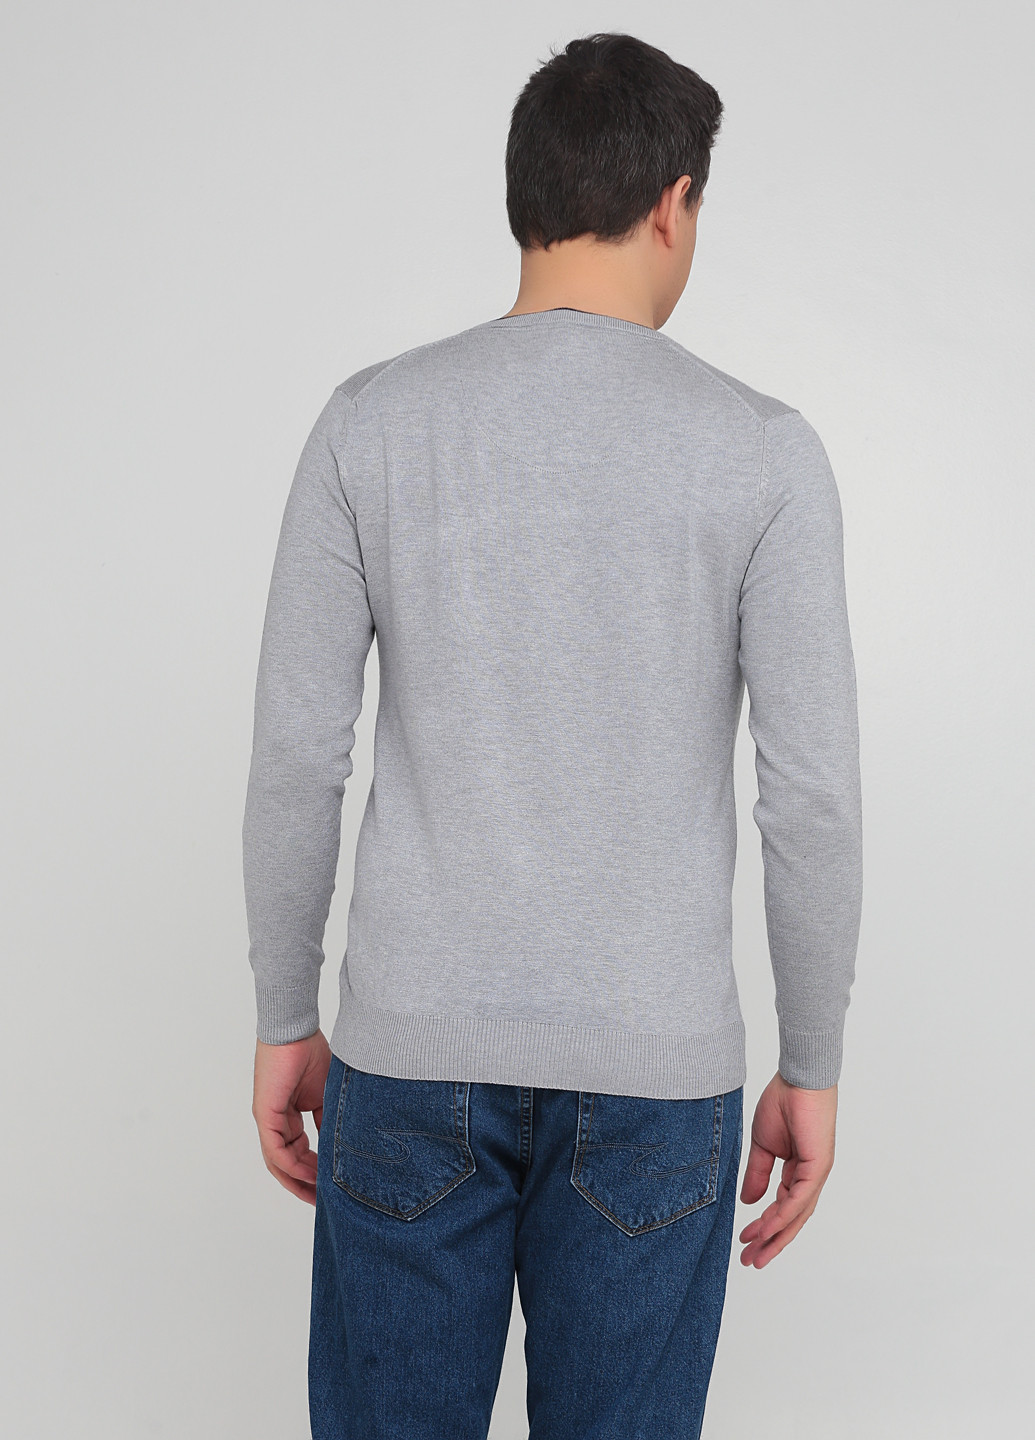 Светло-серый демисезонный пуловер пуловер Benson & Cherry